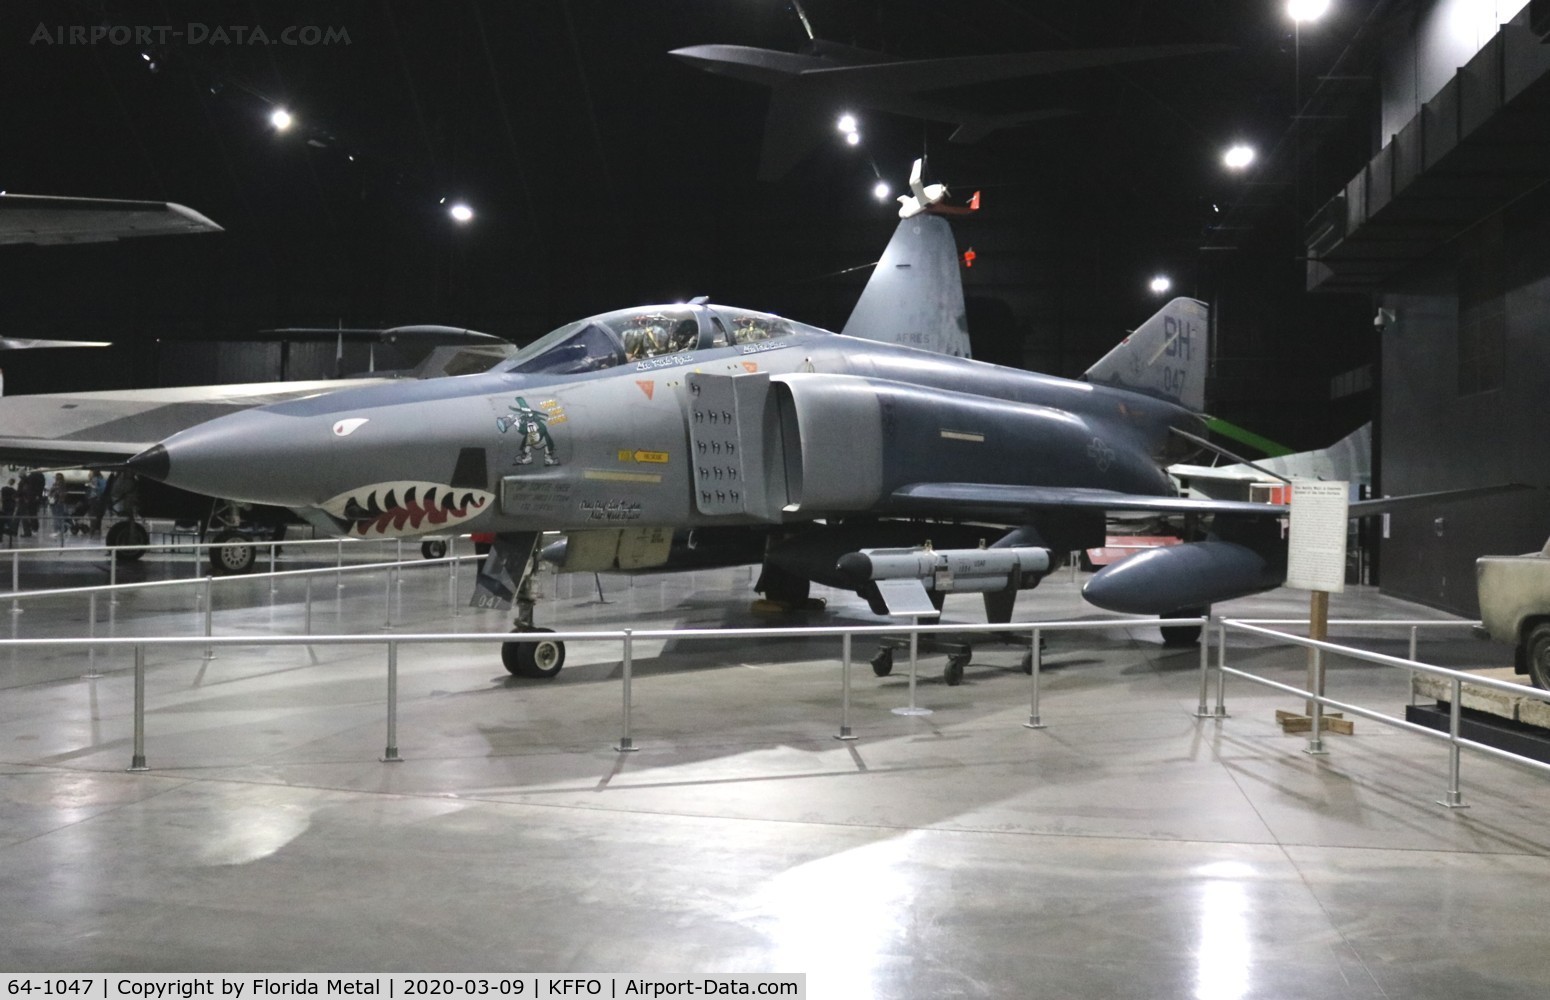 64-1047, 1964 McDonnell RF-4C-22-MC Phantom II C/N 947, Air Force Museum 2020